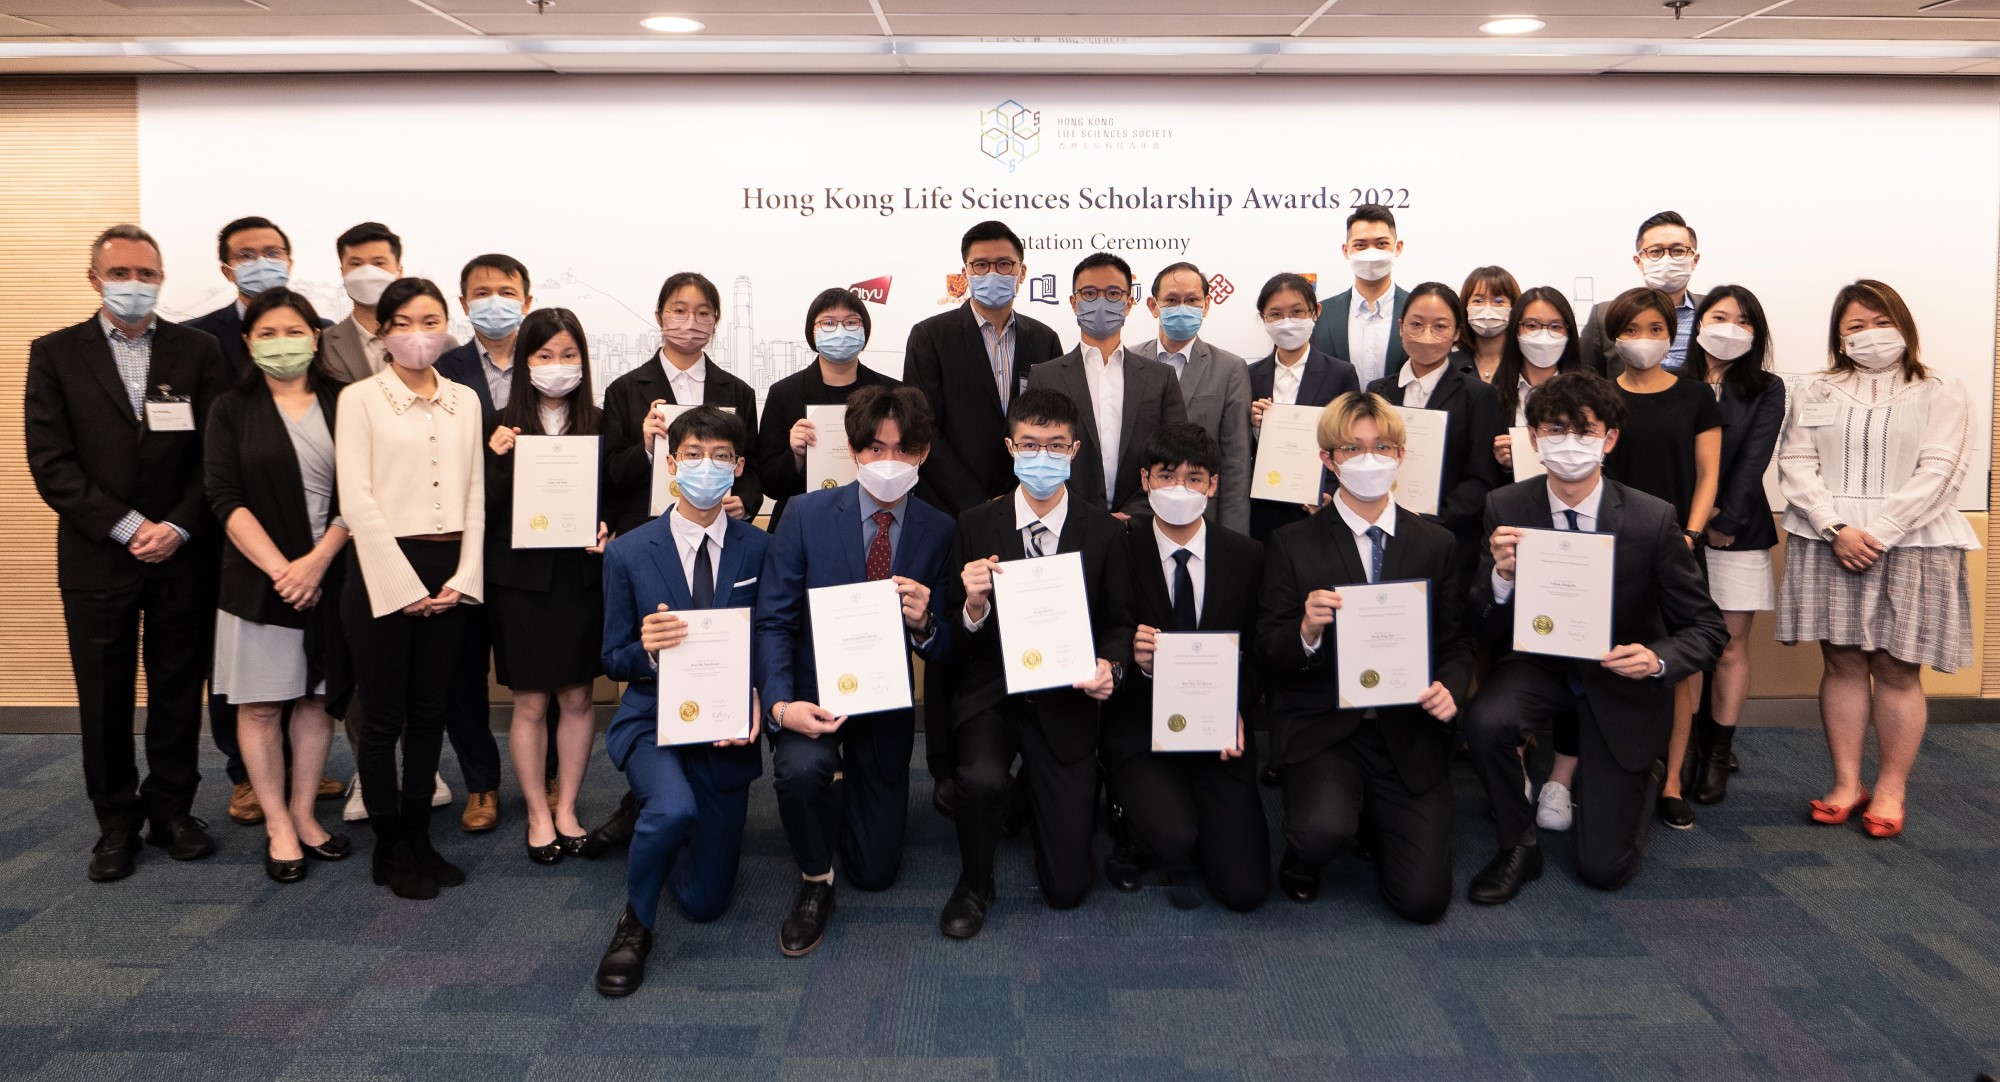 Hong Kong Life Sciences Scholarship Awards 2022 - Presentation Ceremony